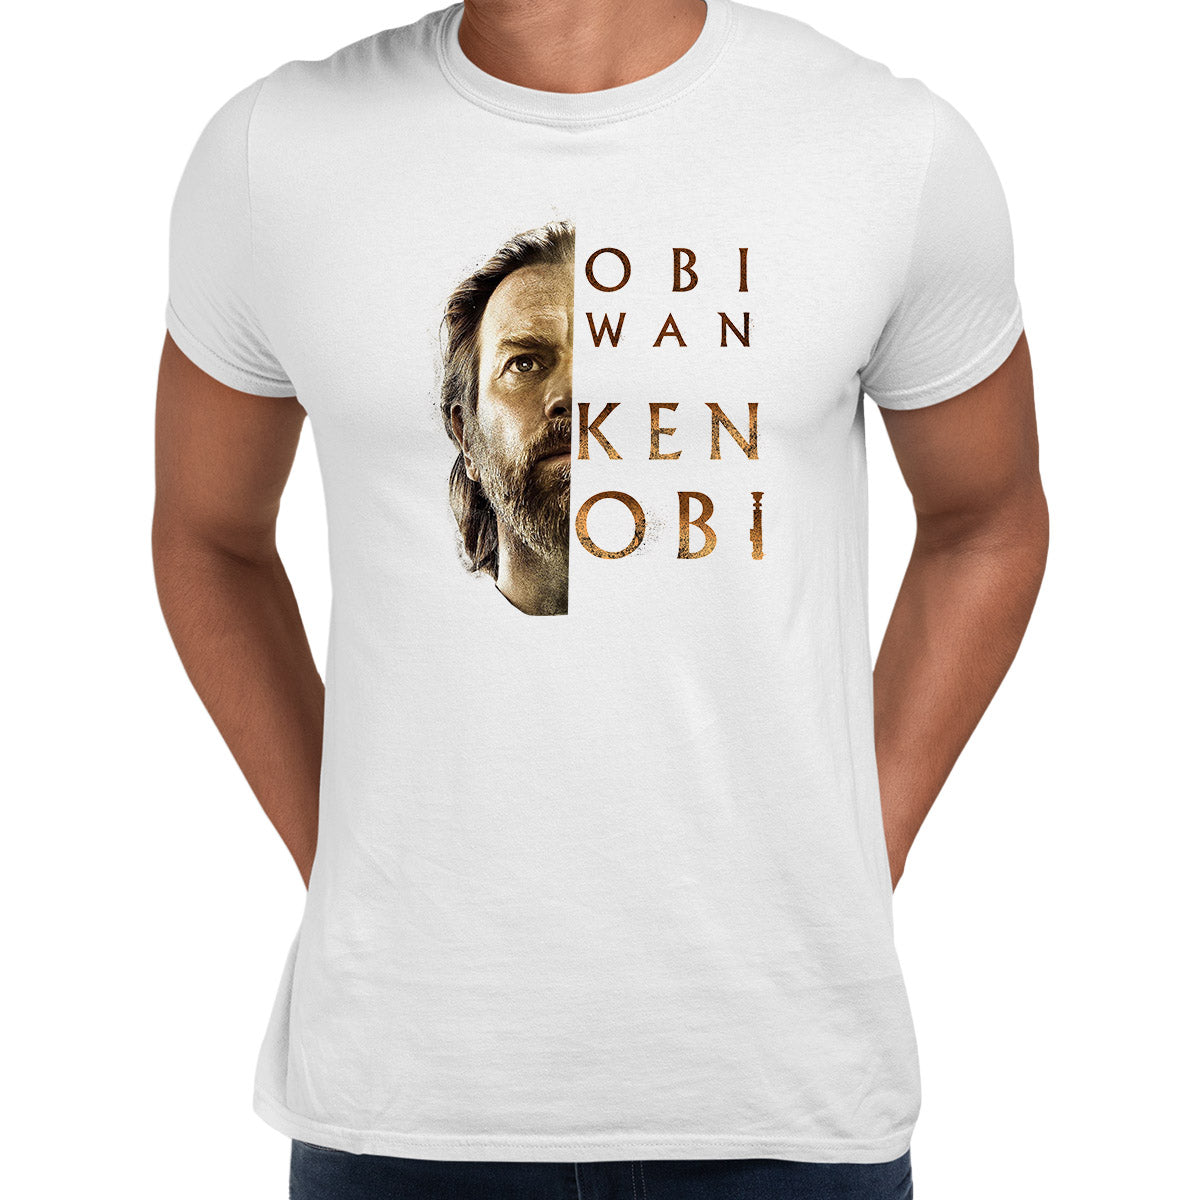 Obi Wan Kenobi T-shirt TV series Star Wars Ewan McGregor - Kuzi Tees